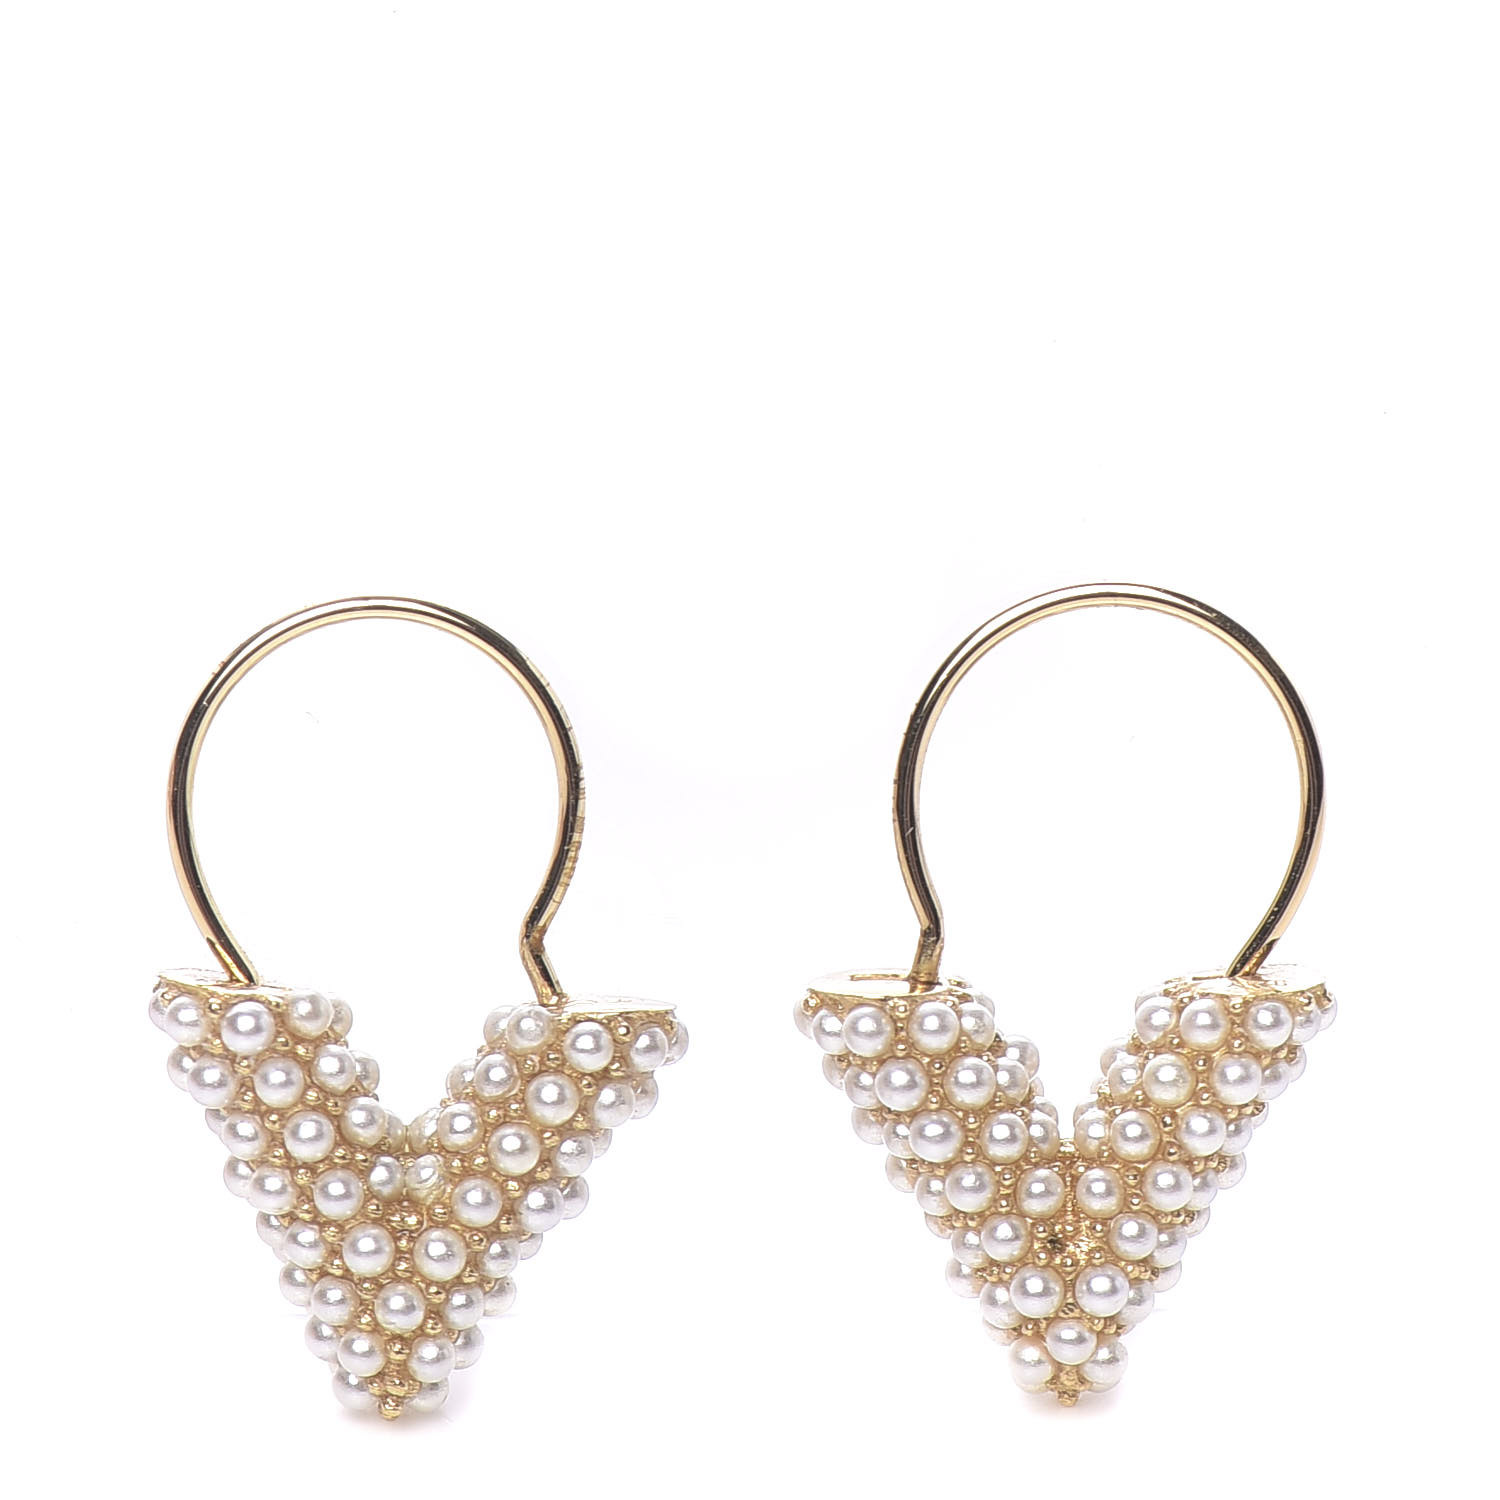 Shop Louis Vuitton Essential v stud earrings (M68153) by yutamum